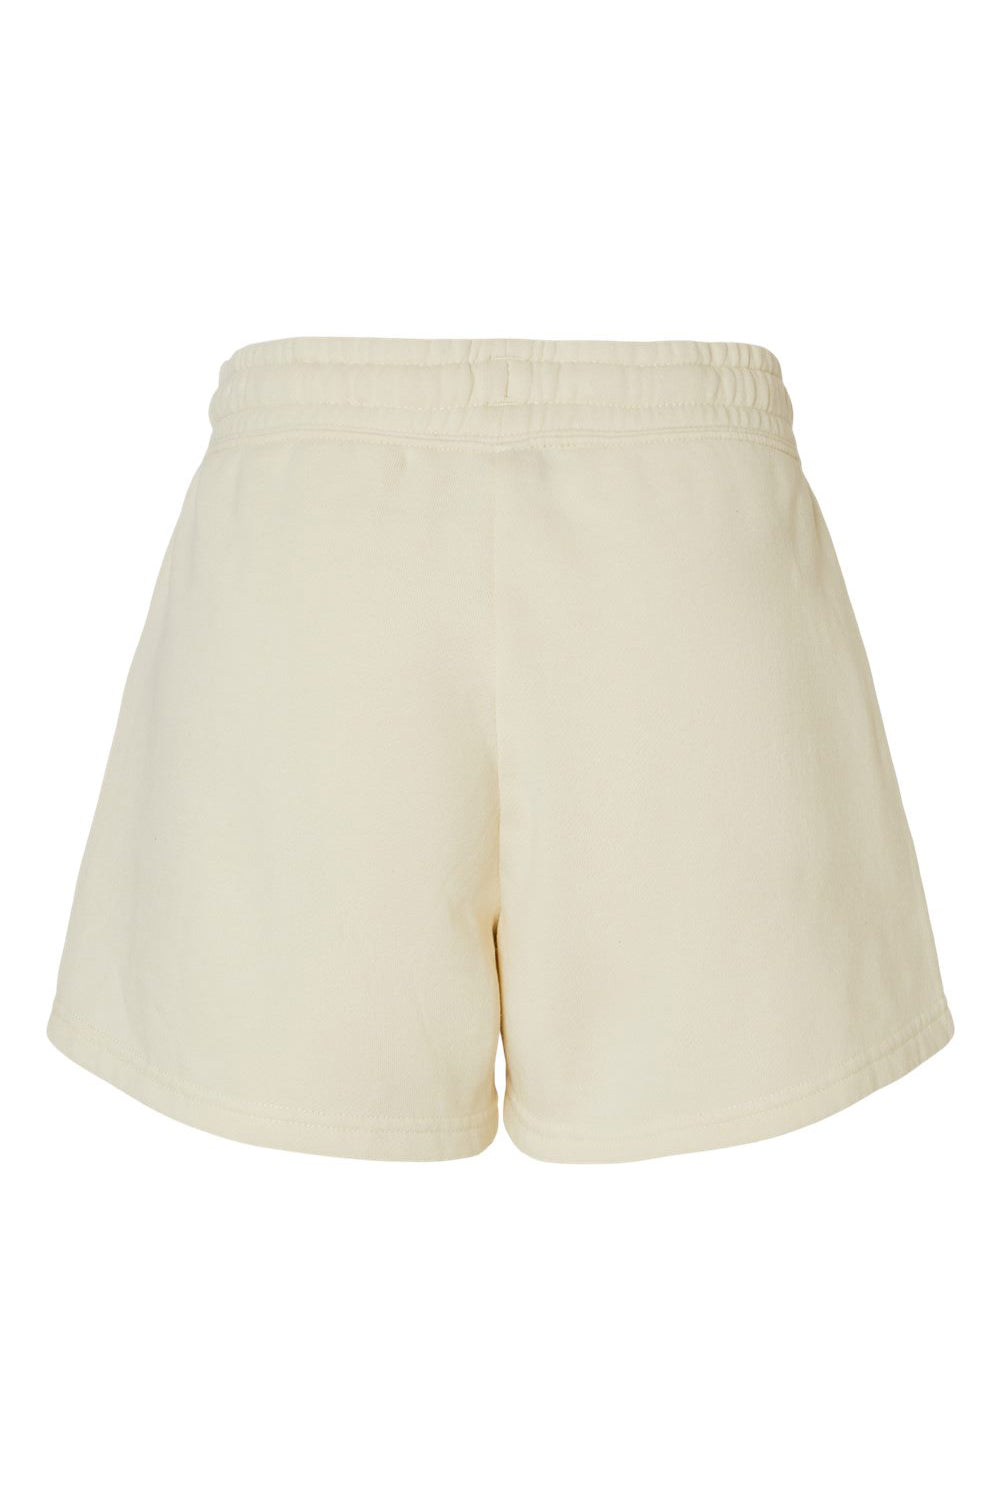 Independent Trading Co. PRM20SRT Womens California Wave Wash Fleece Shorts w/ Pockets Bone Flat Back